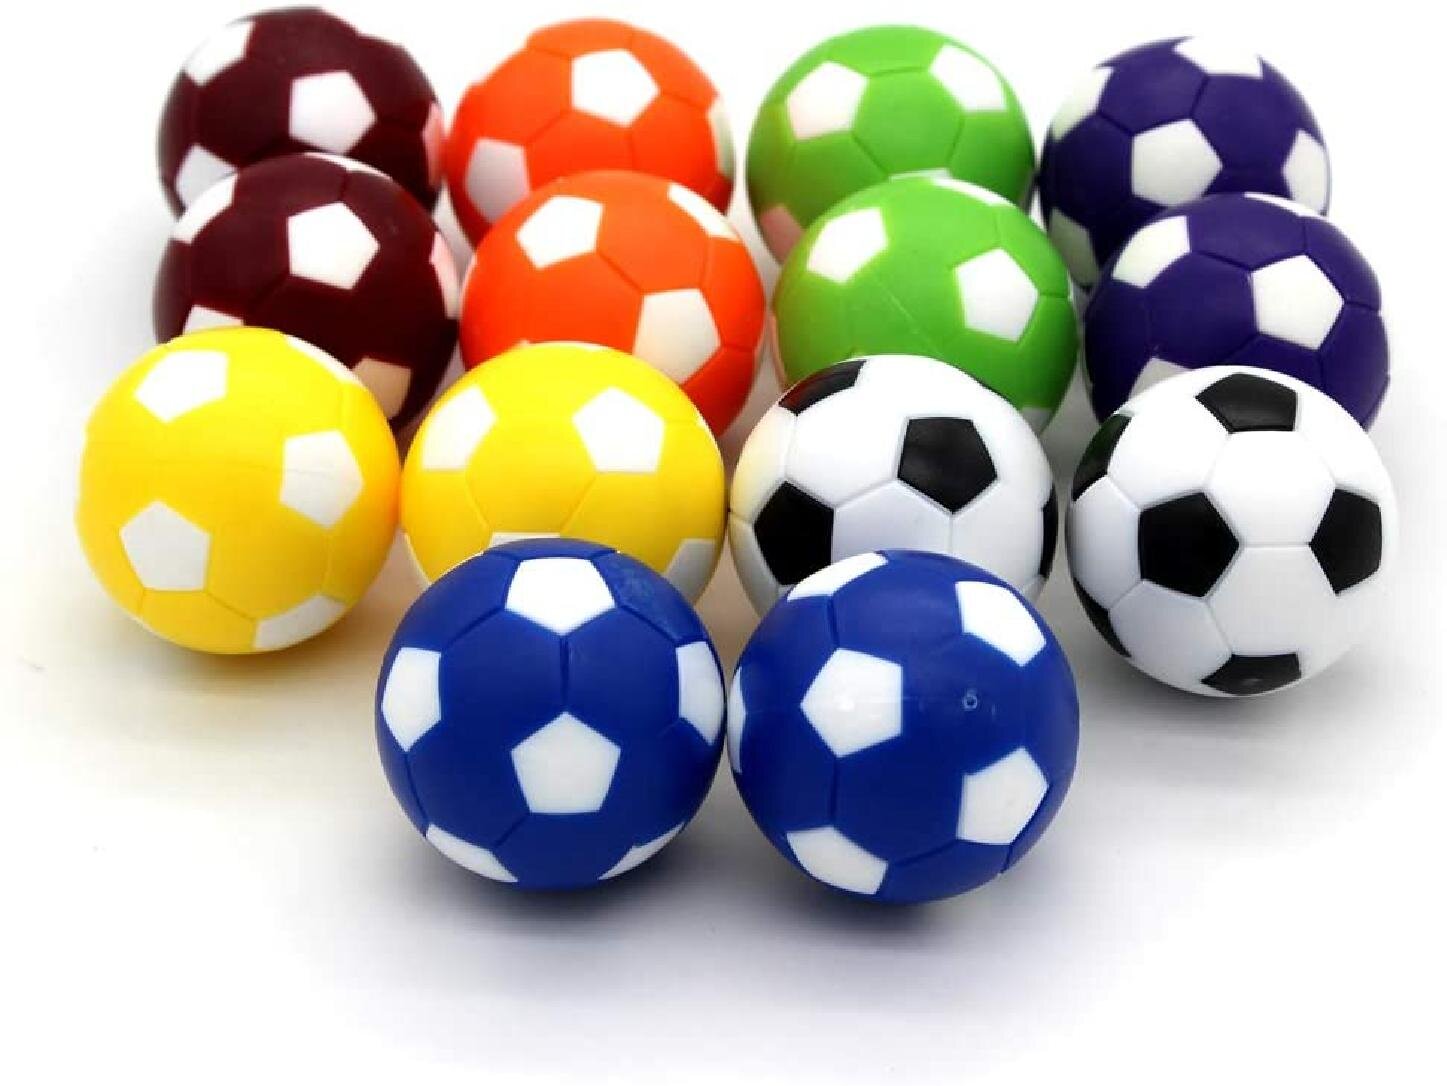 36MM Wooden Desktop Soccer Sports Foosball Table Soccer Replacement Balls Cork Tabletop Games Balls